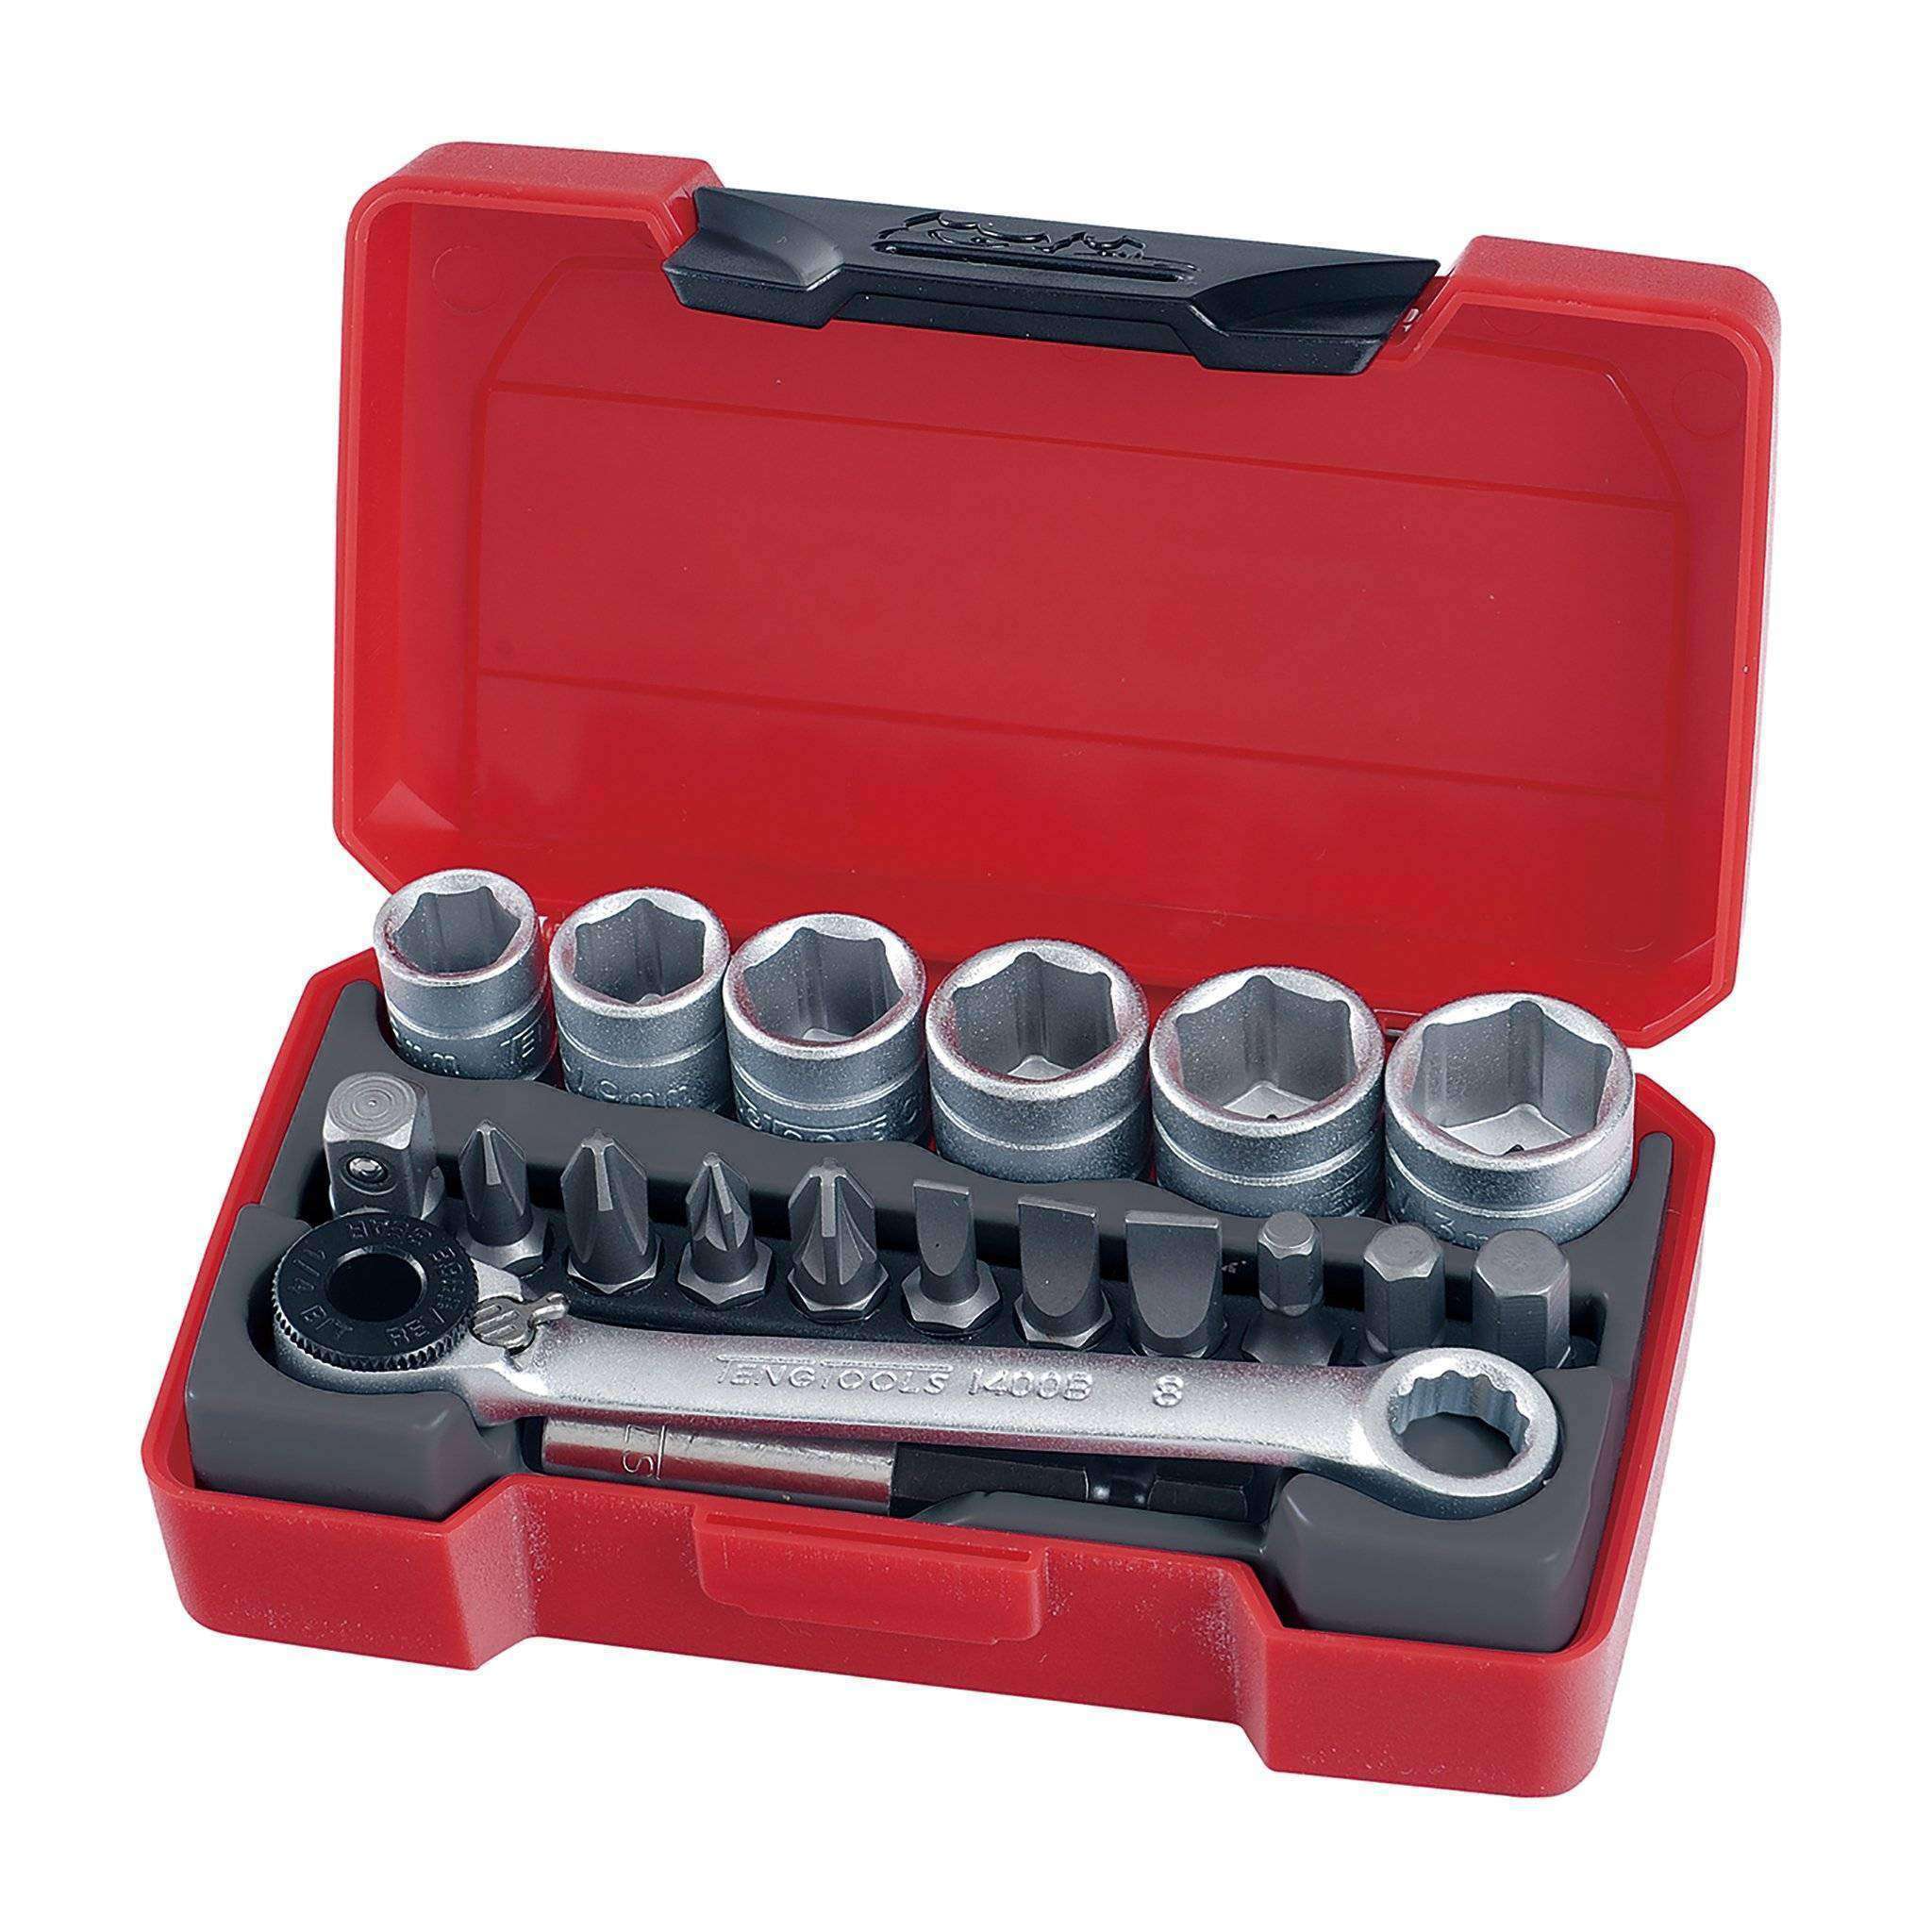 Teng Tools 19 Piece 1/4 Inch Drive 6 Point Metric Regular/Shallow Socket Set (8mm - 13mm) - T1419